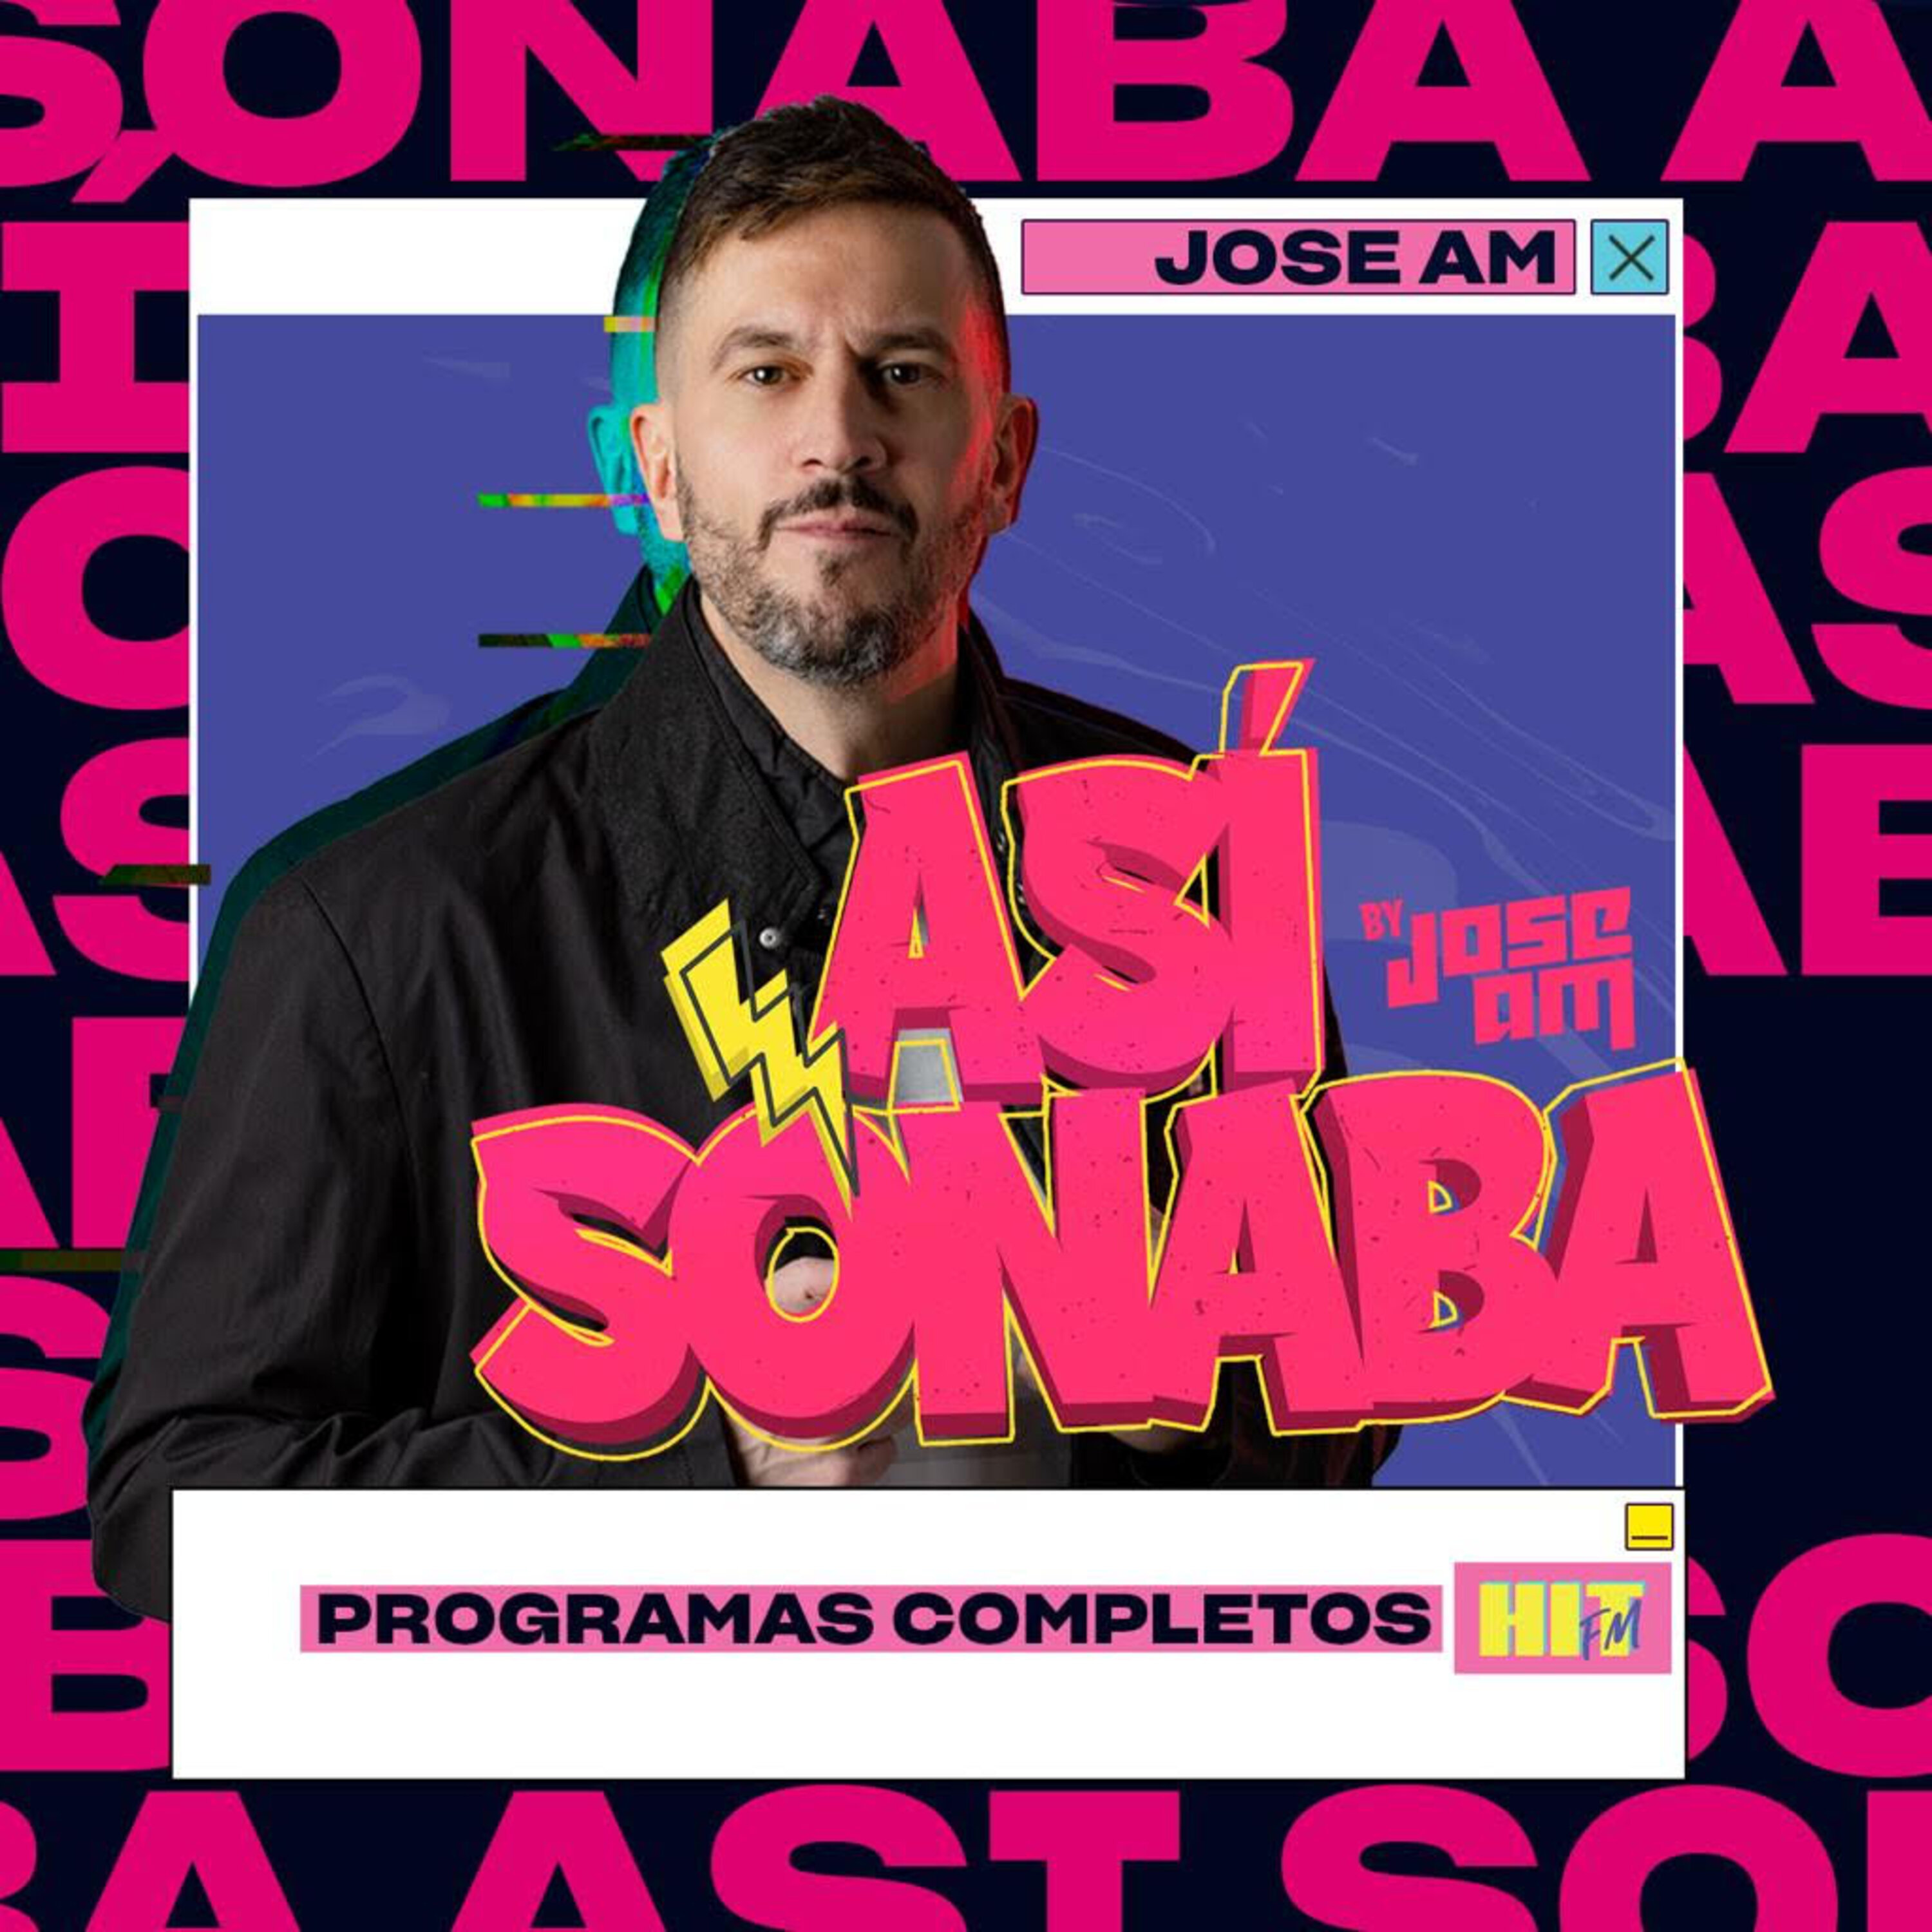 Así Sonaba by Jose AM EP 040 - EURODANCE Parte 2